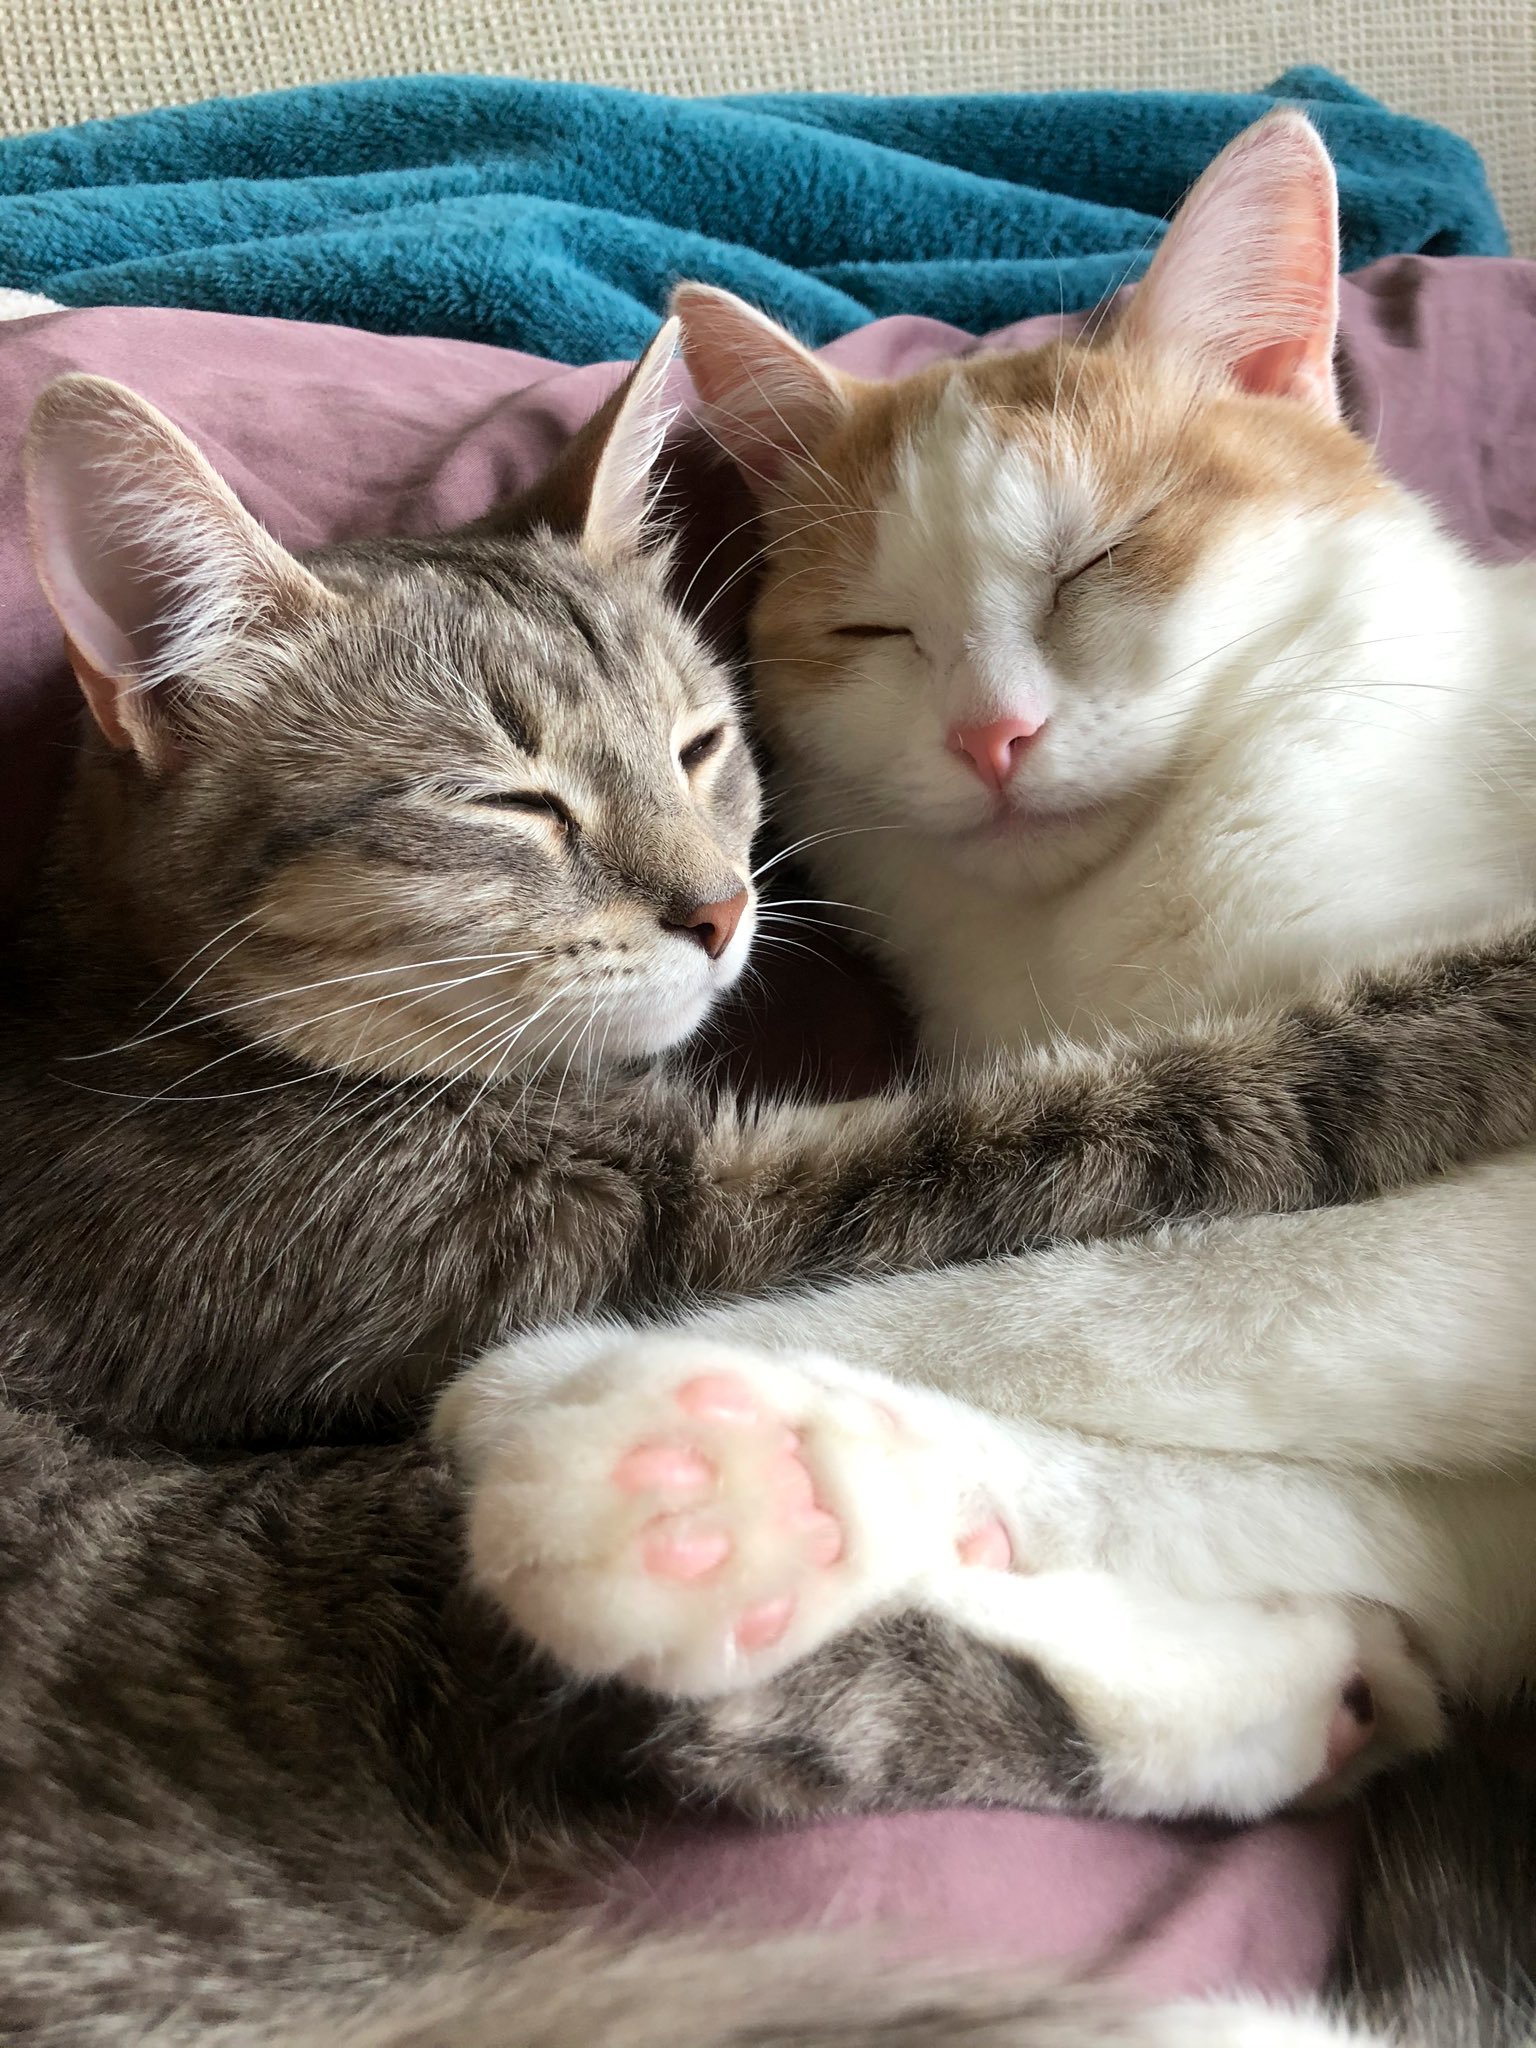 Кошки спят вместе. Кошки обнимашки. Спящие котята. Коты обнимаются. Кошки спят в обнимку.